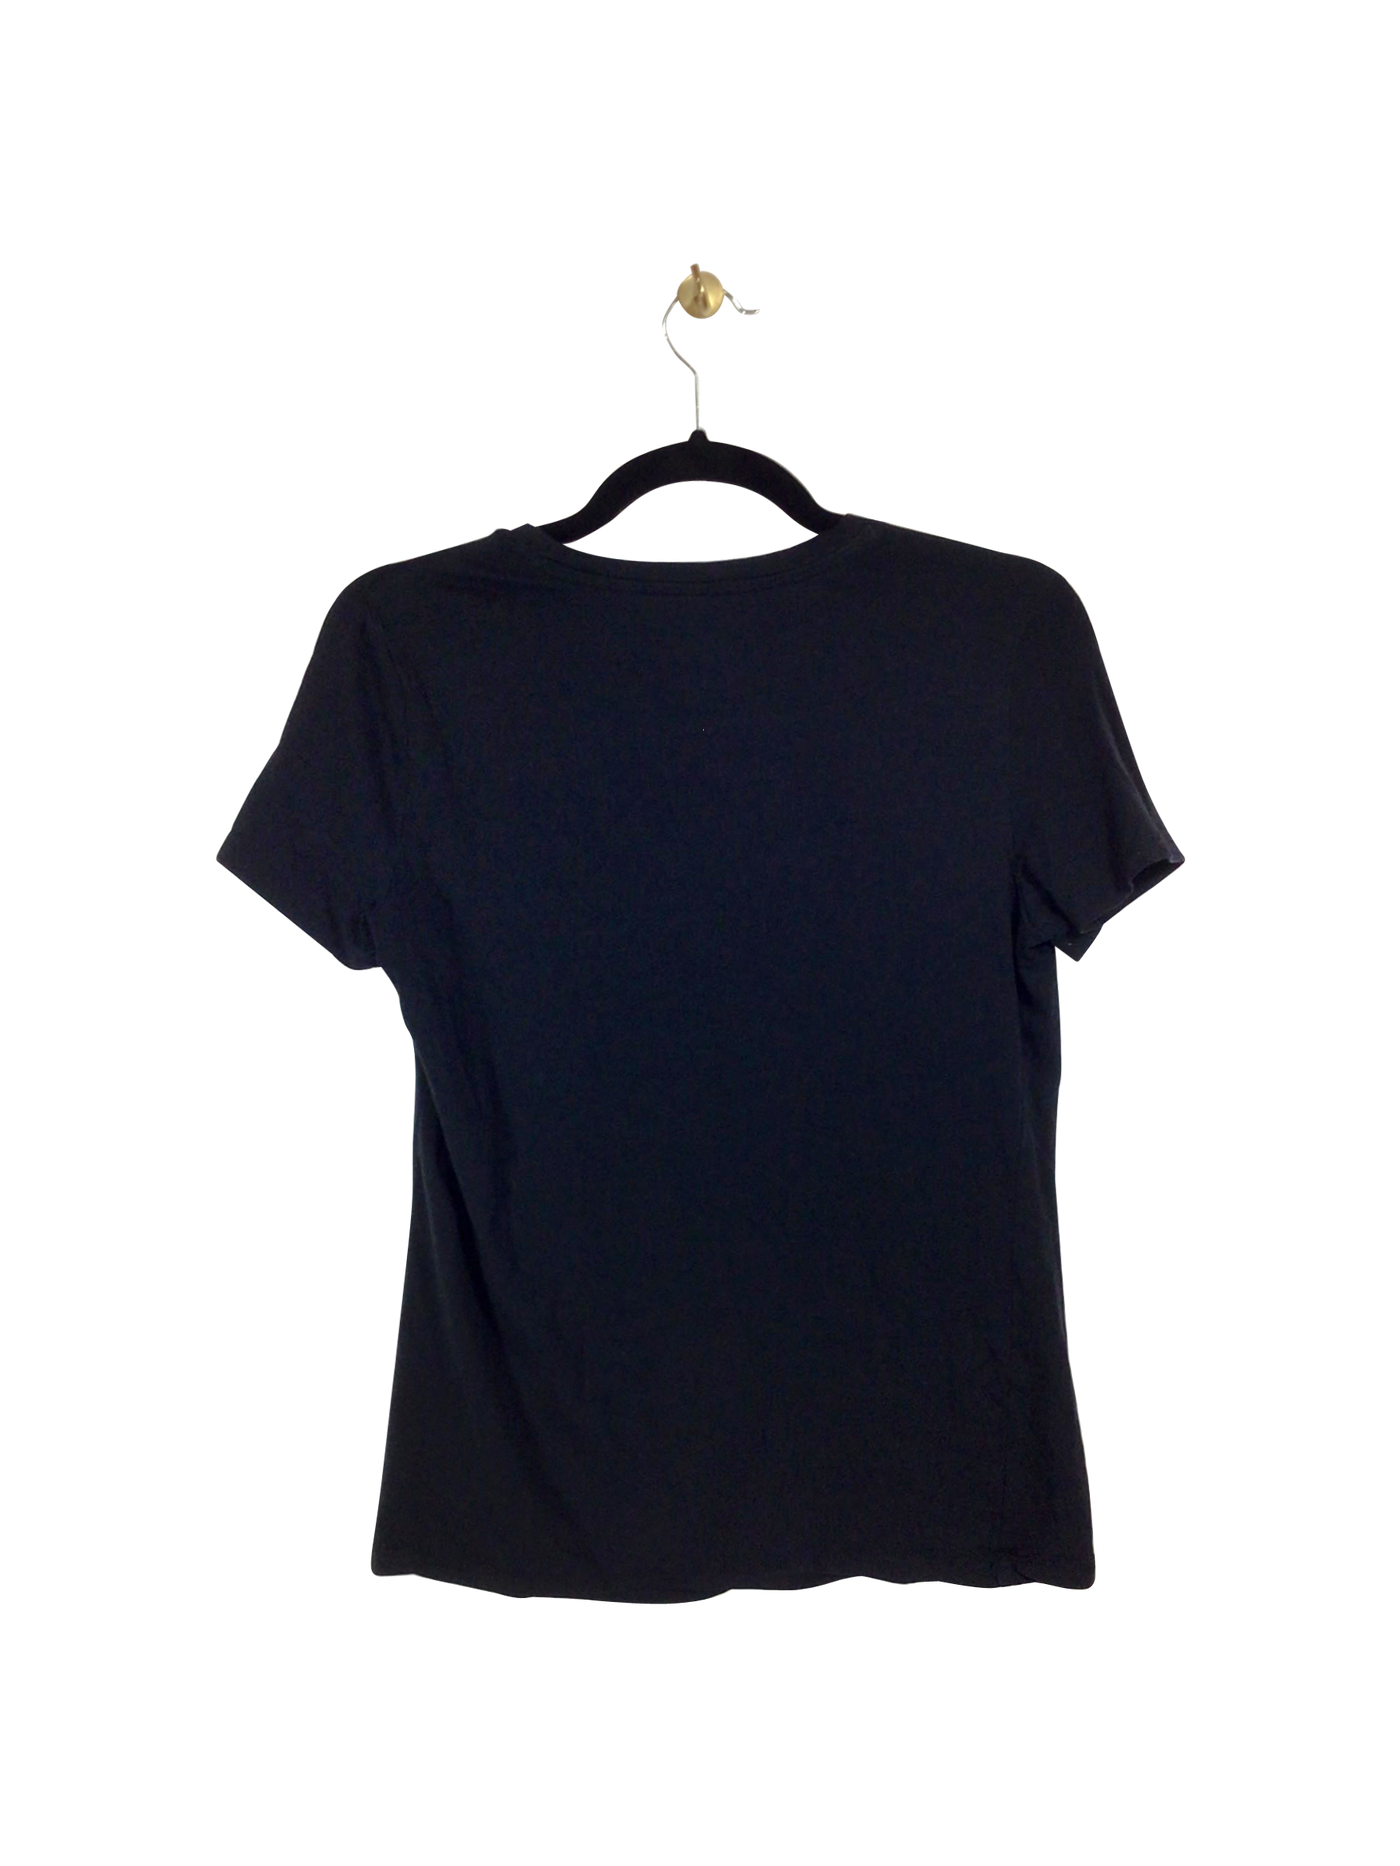 LORD & TAYLOR Regular fit T-shirt in Black - Size S | 19 $ KOOP